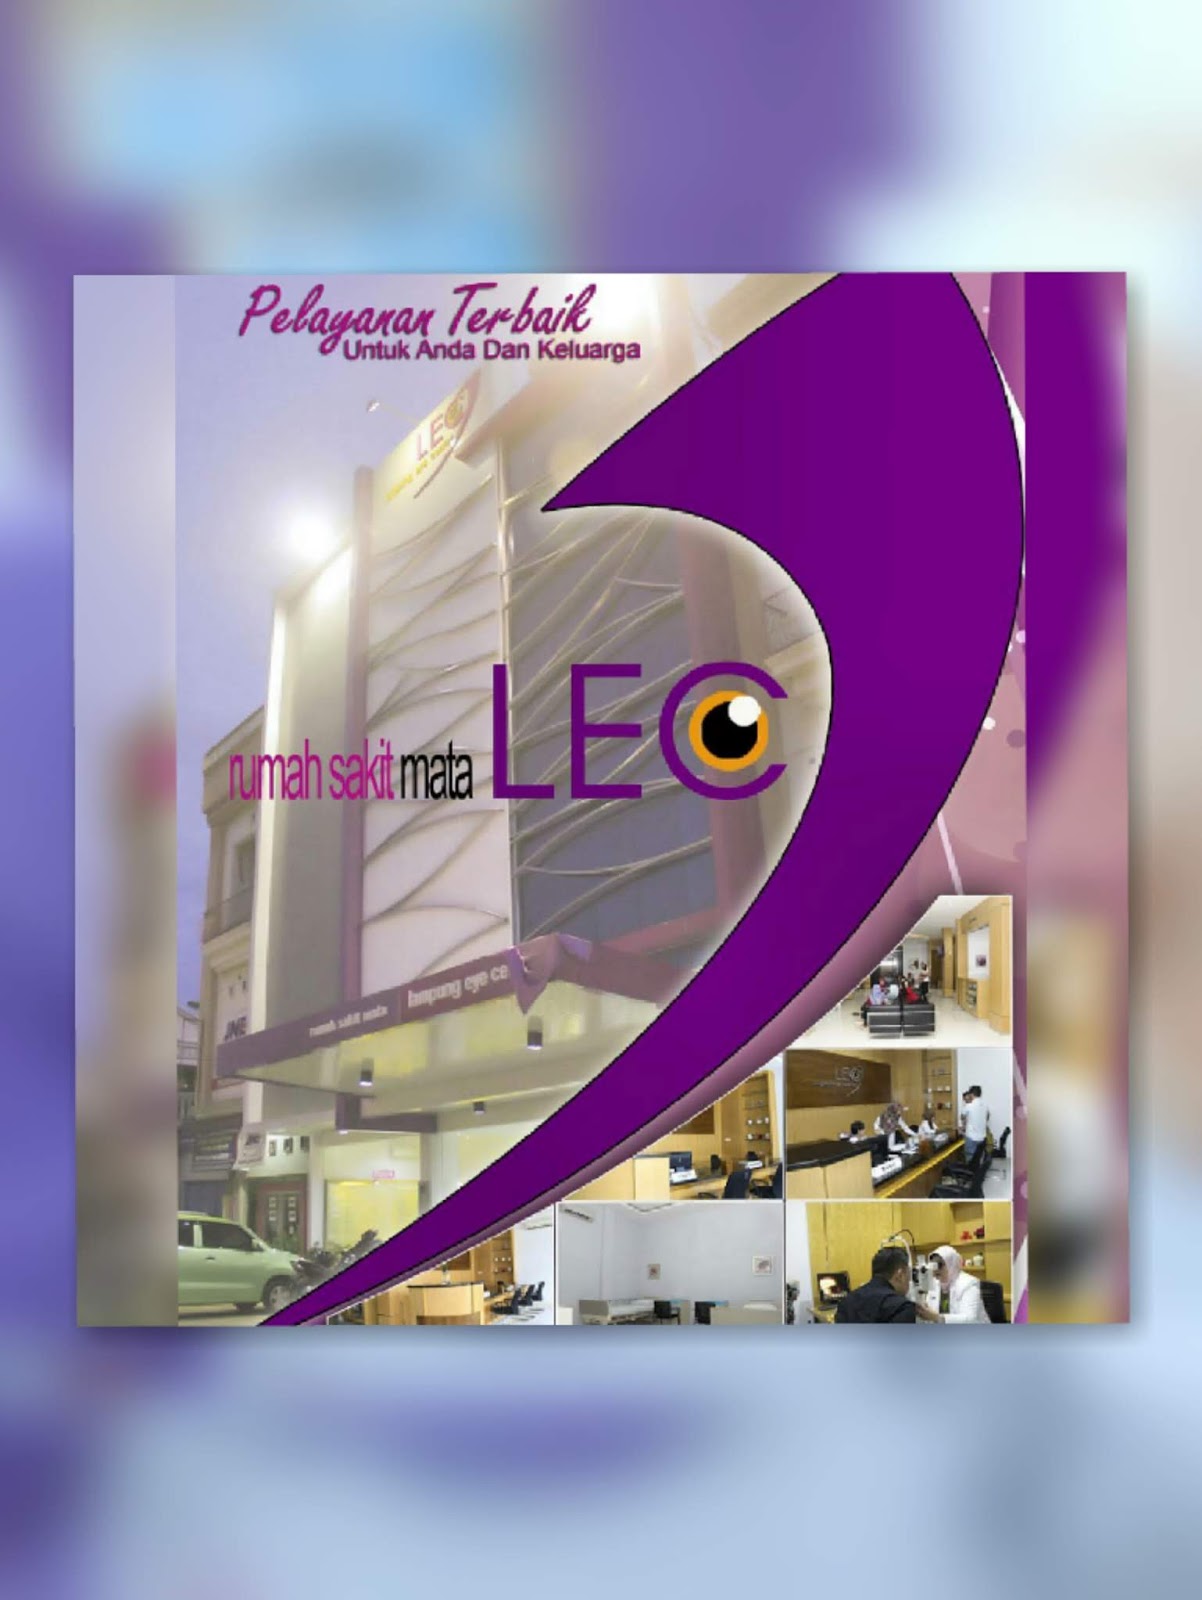 Lowongan Rumah Sakit Mata Lampung Eye Center (LEC)